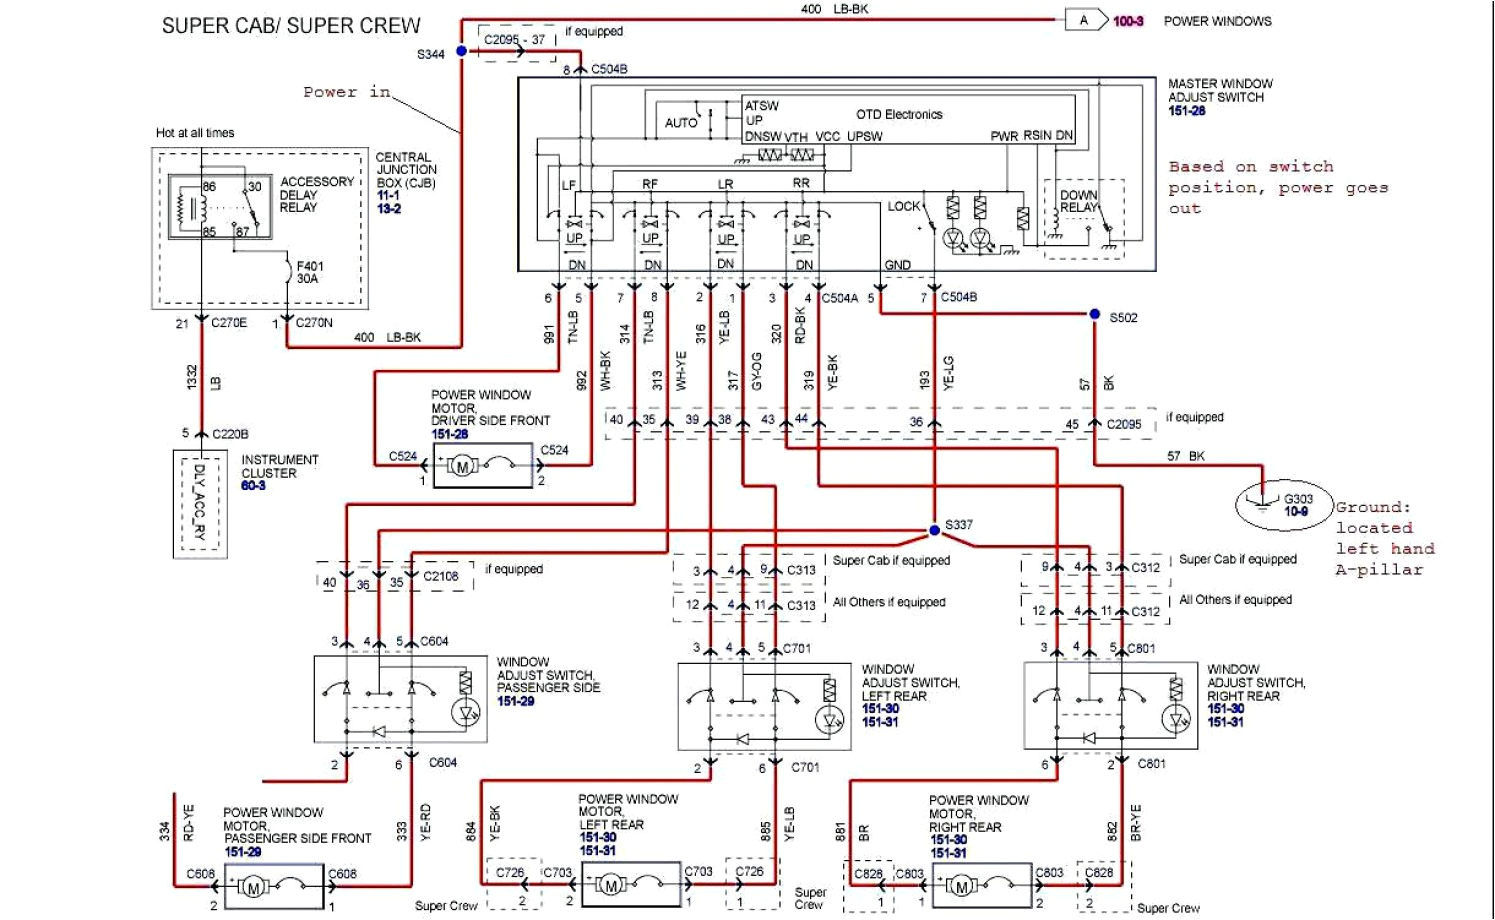 ford 7610 wiring diagram wiring diagram technic6600 ford tractor wiring diagram wiring diagram viewford 6600 tractor